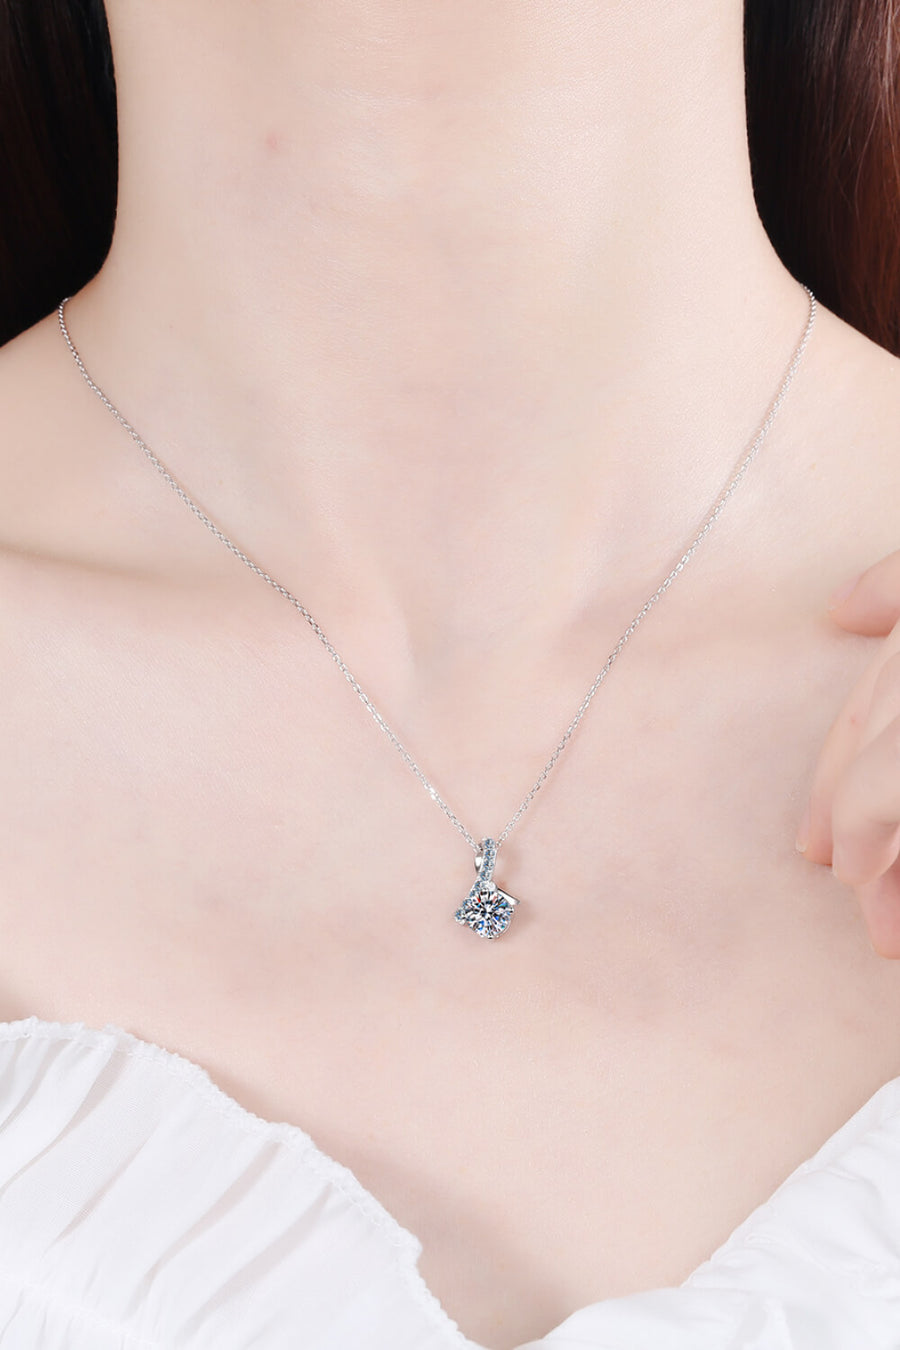 1# BEST Diamond Pendant Necklace Jewelry Gifts for Women | #1 Best Most Top Trendy Trending 1 Carat Diamond Pendant Necklace - Unique and Chic | MASON New York